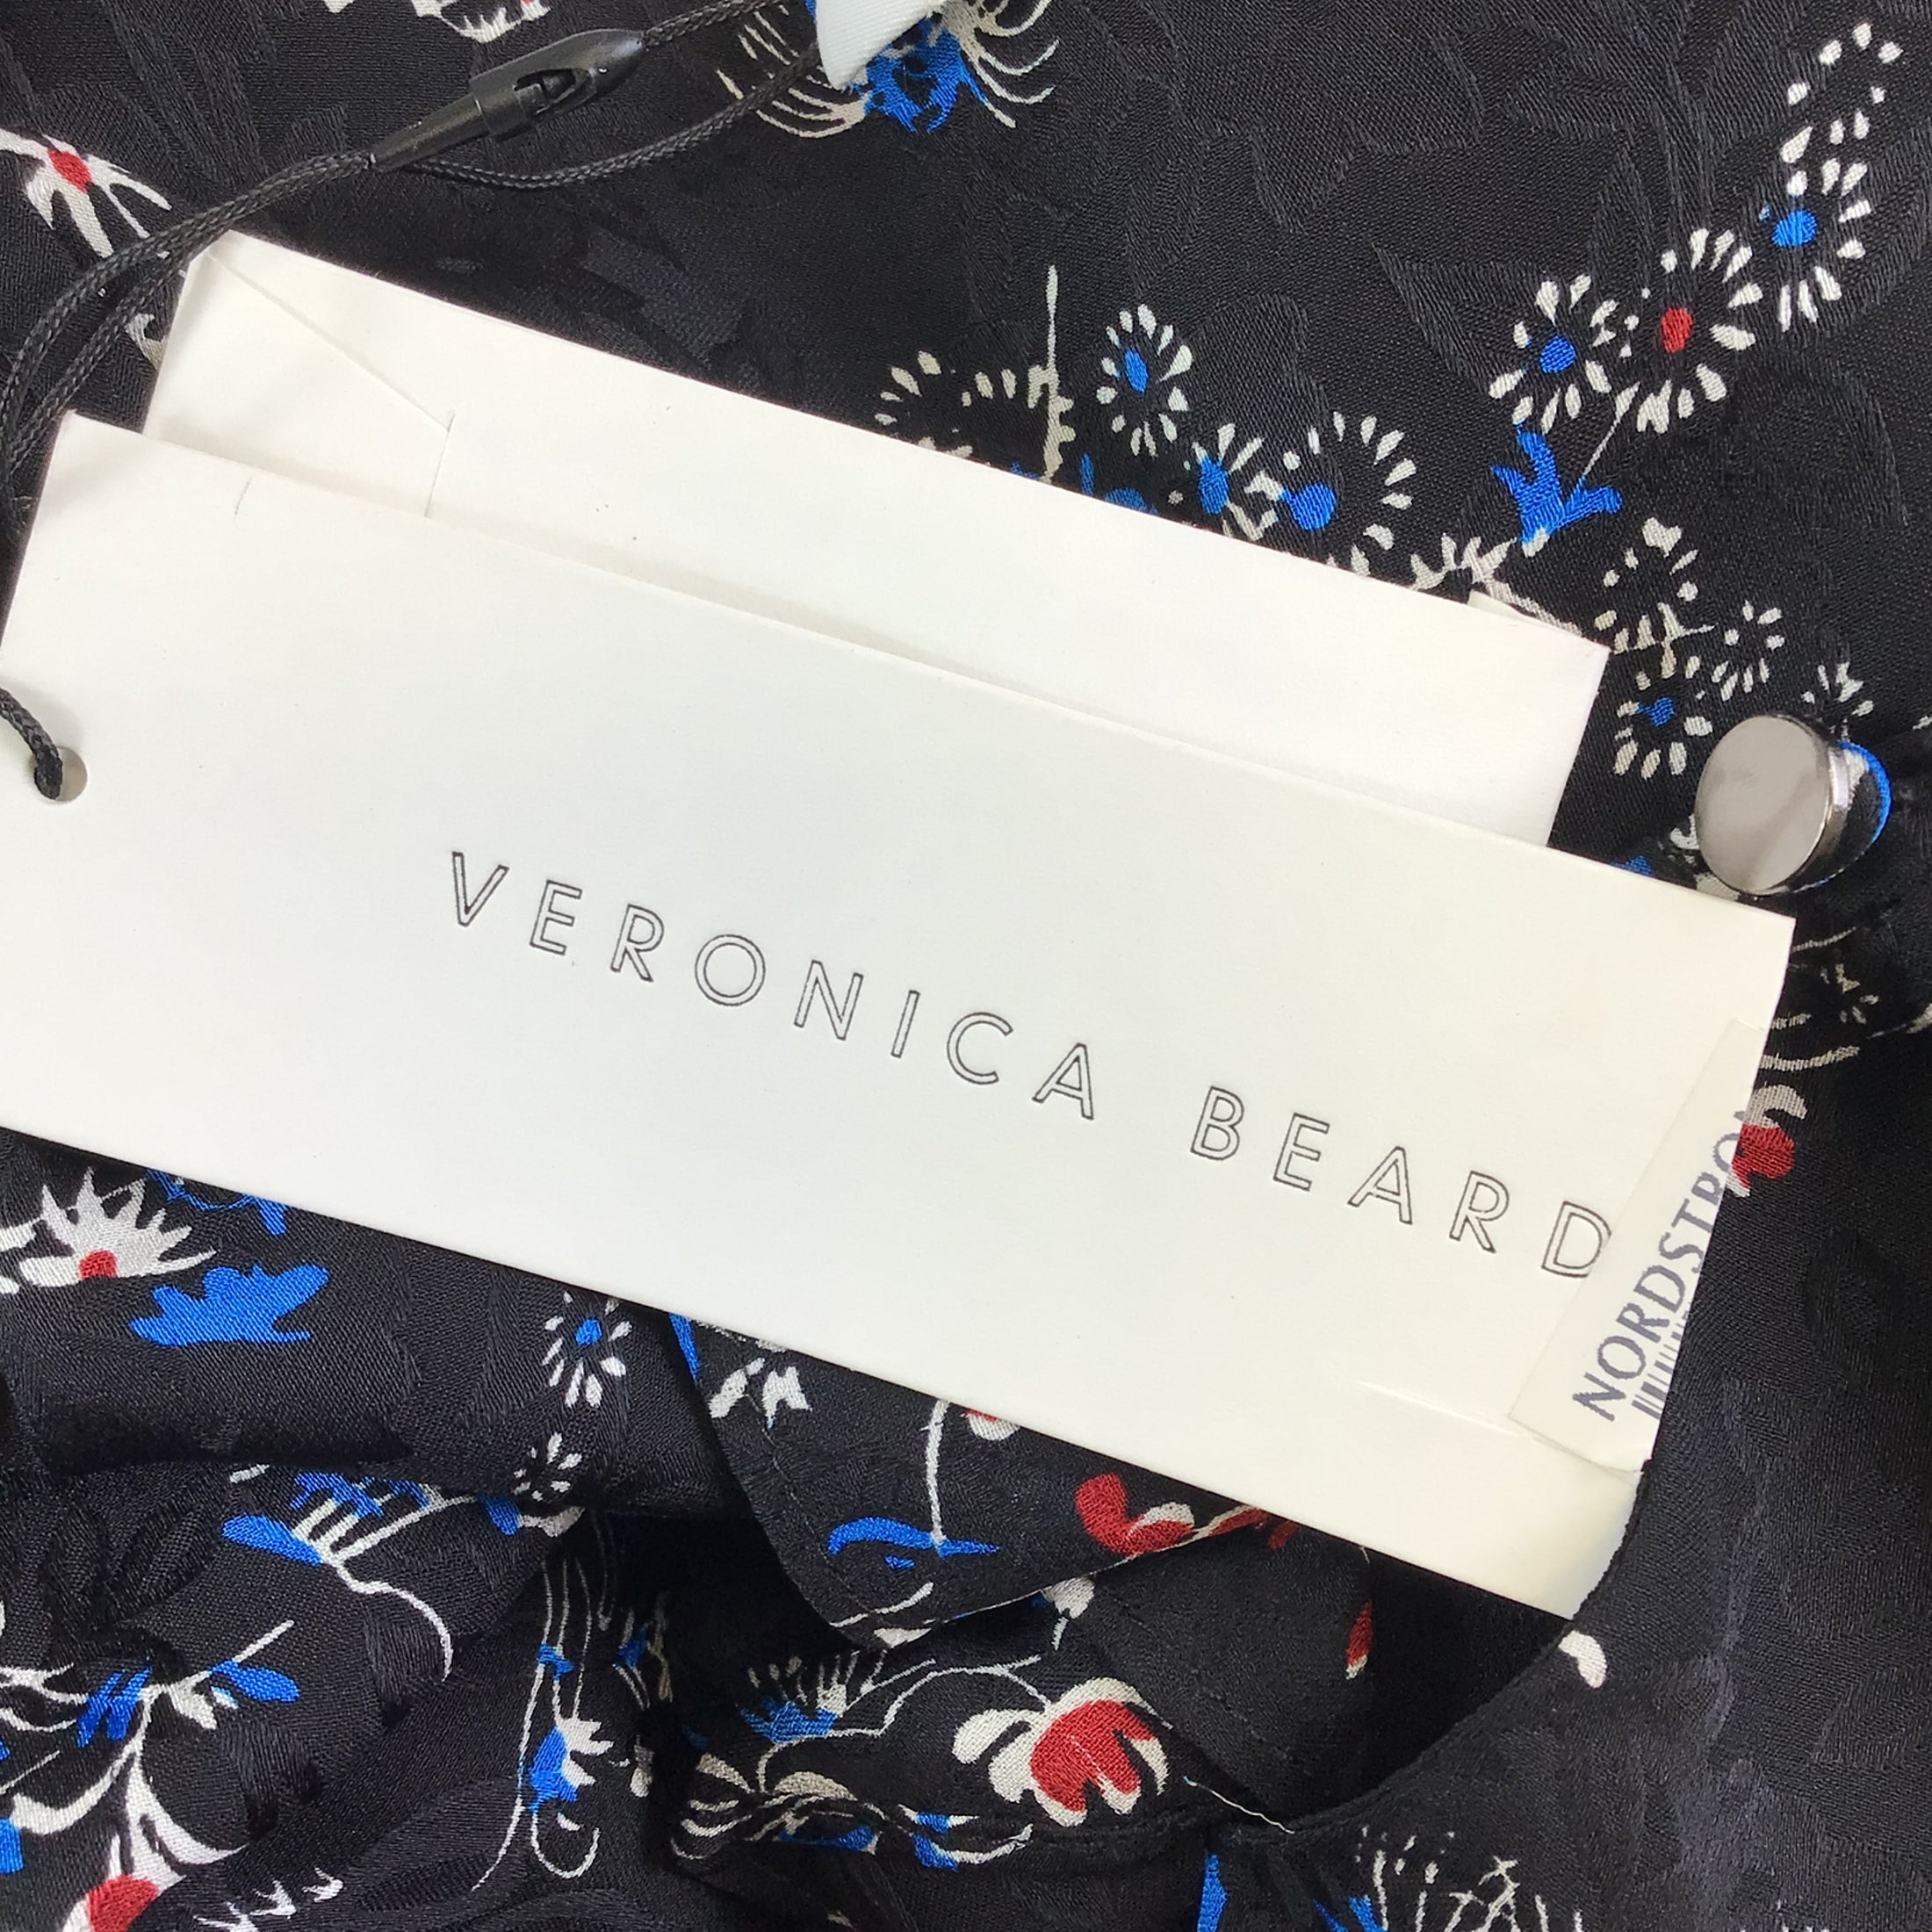 Veronica Beard Black Preston Floral Printed Long Sleeved Silk Dress